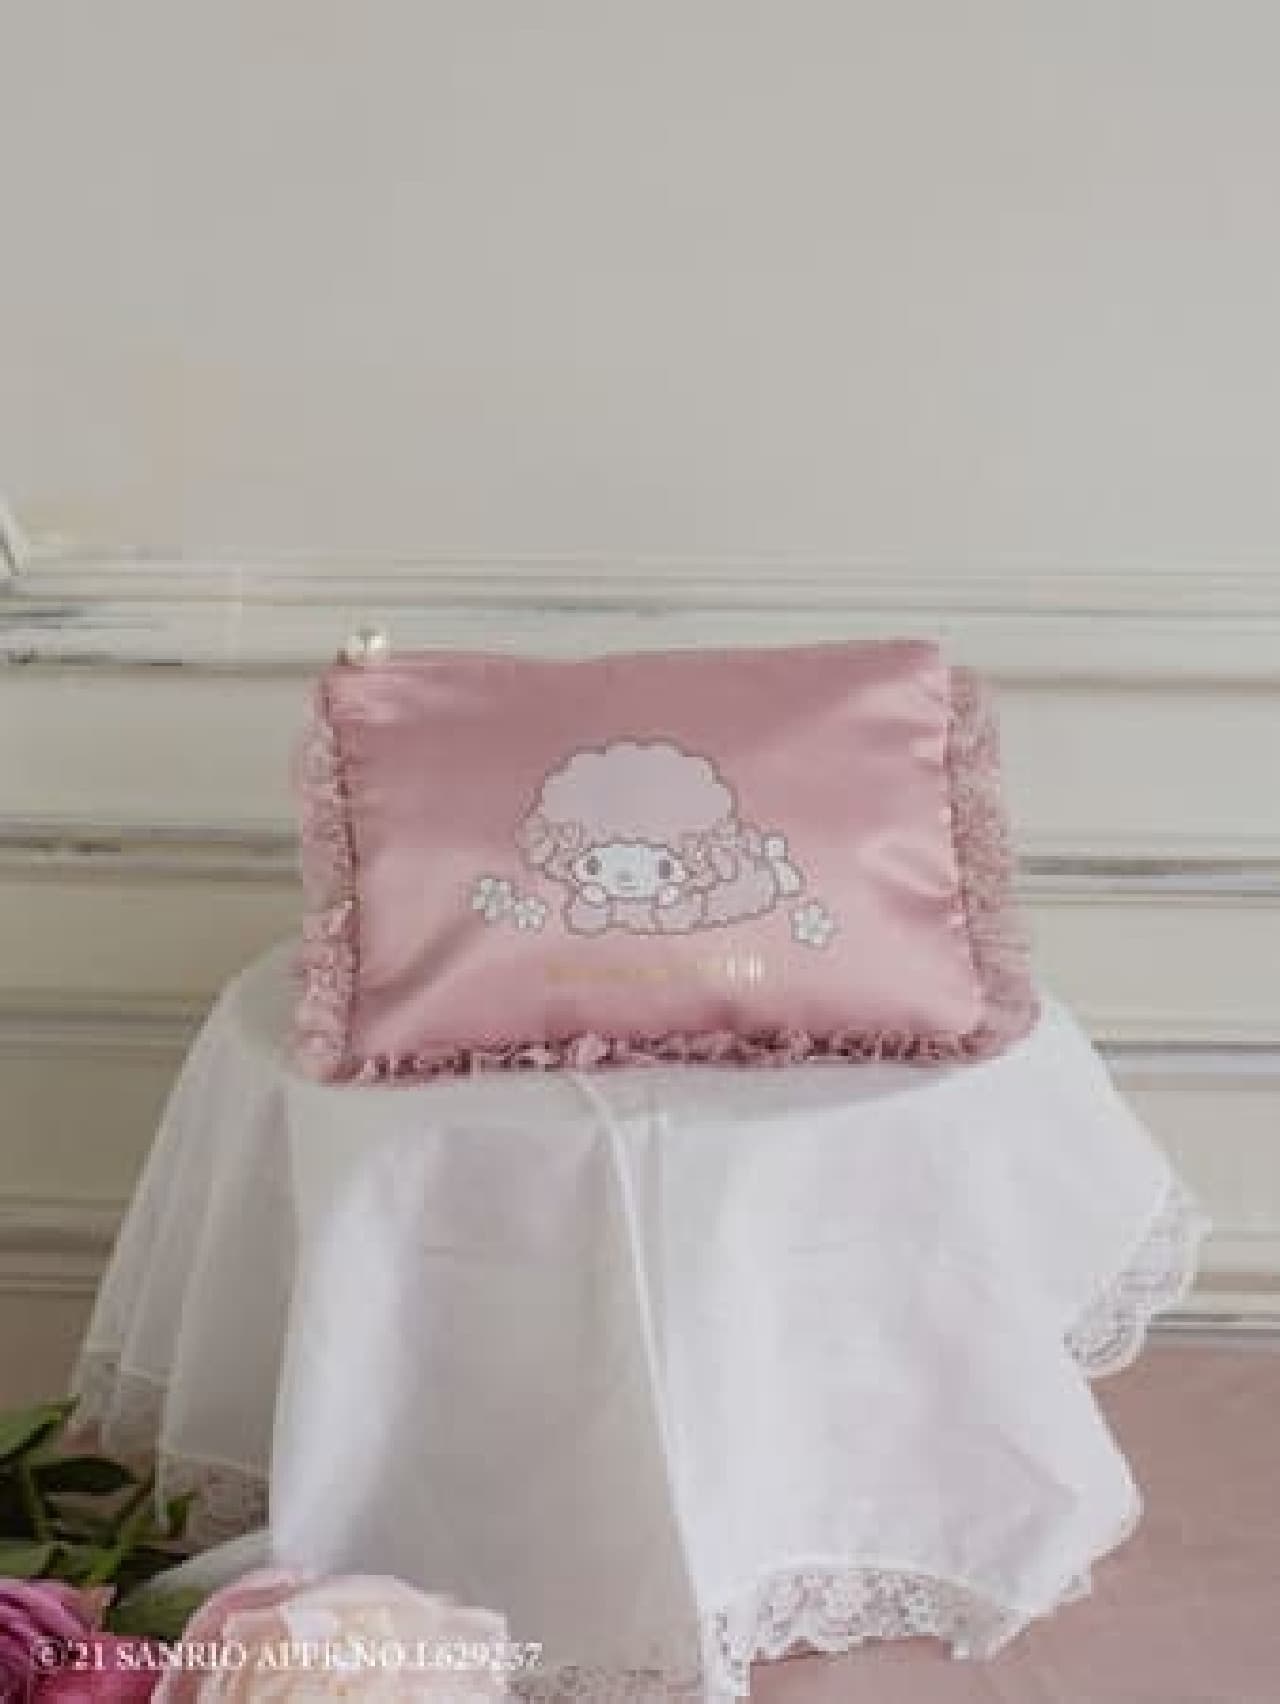 Maison de FLEUR x My Sweet Piano collaboration --Pink tote bag, stuffed animal, etc.